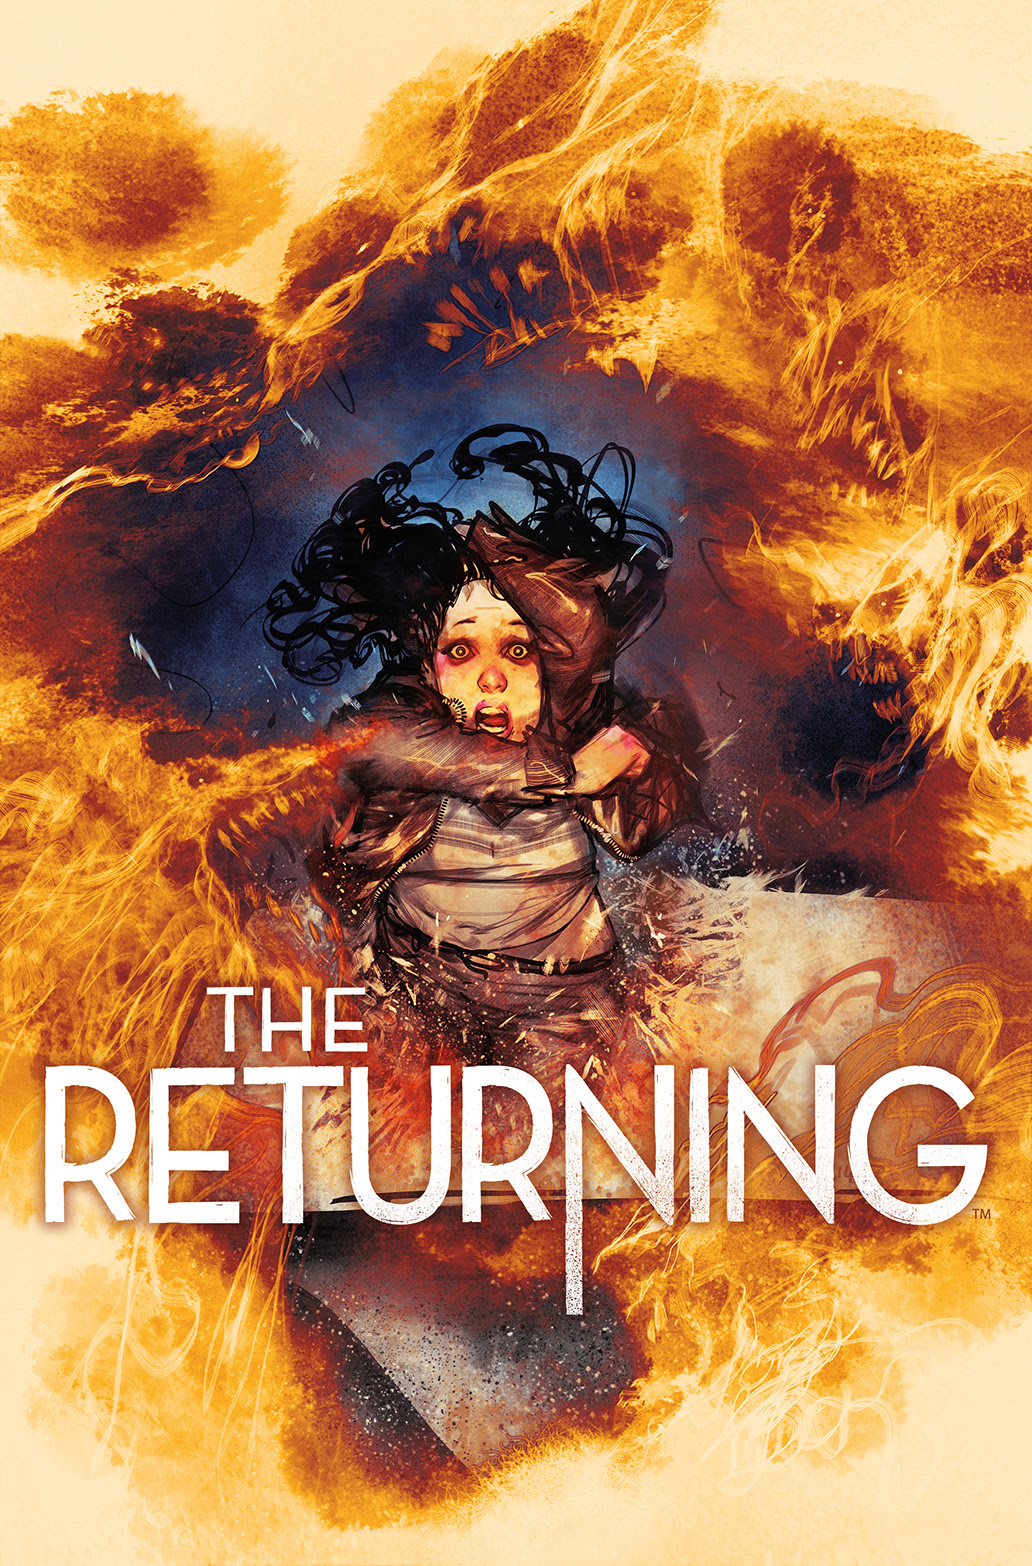 THE RETURNING #3 Cover by Frazer Irving